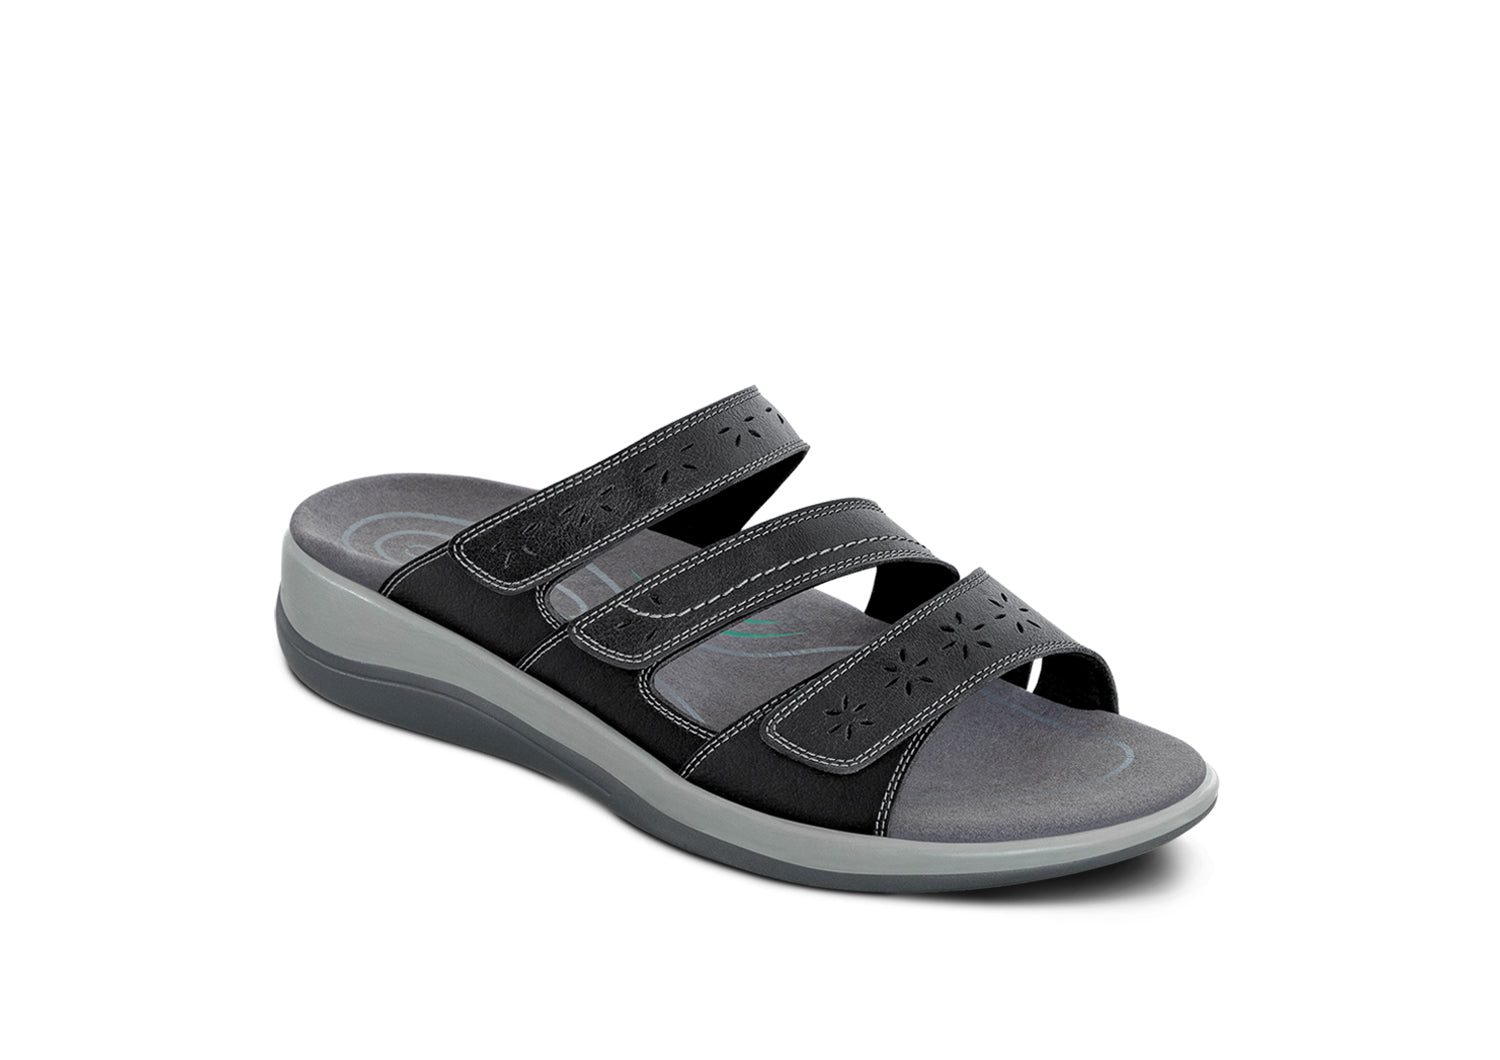 Supplefeet  Yoga Sandals Comfys - Black